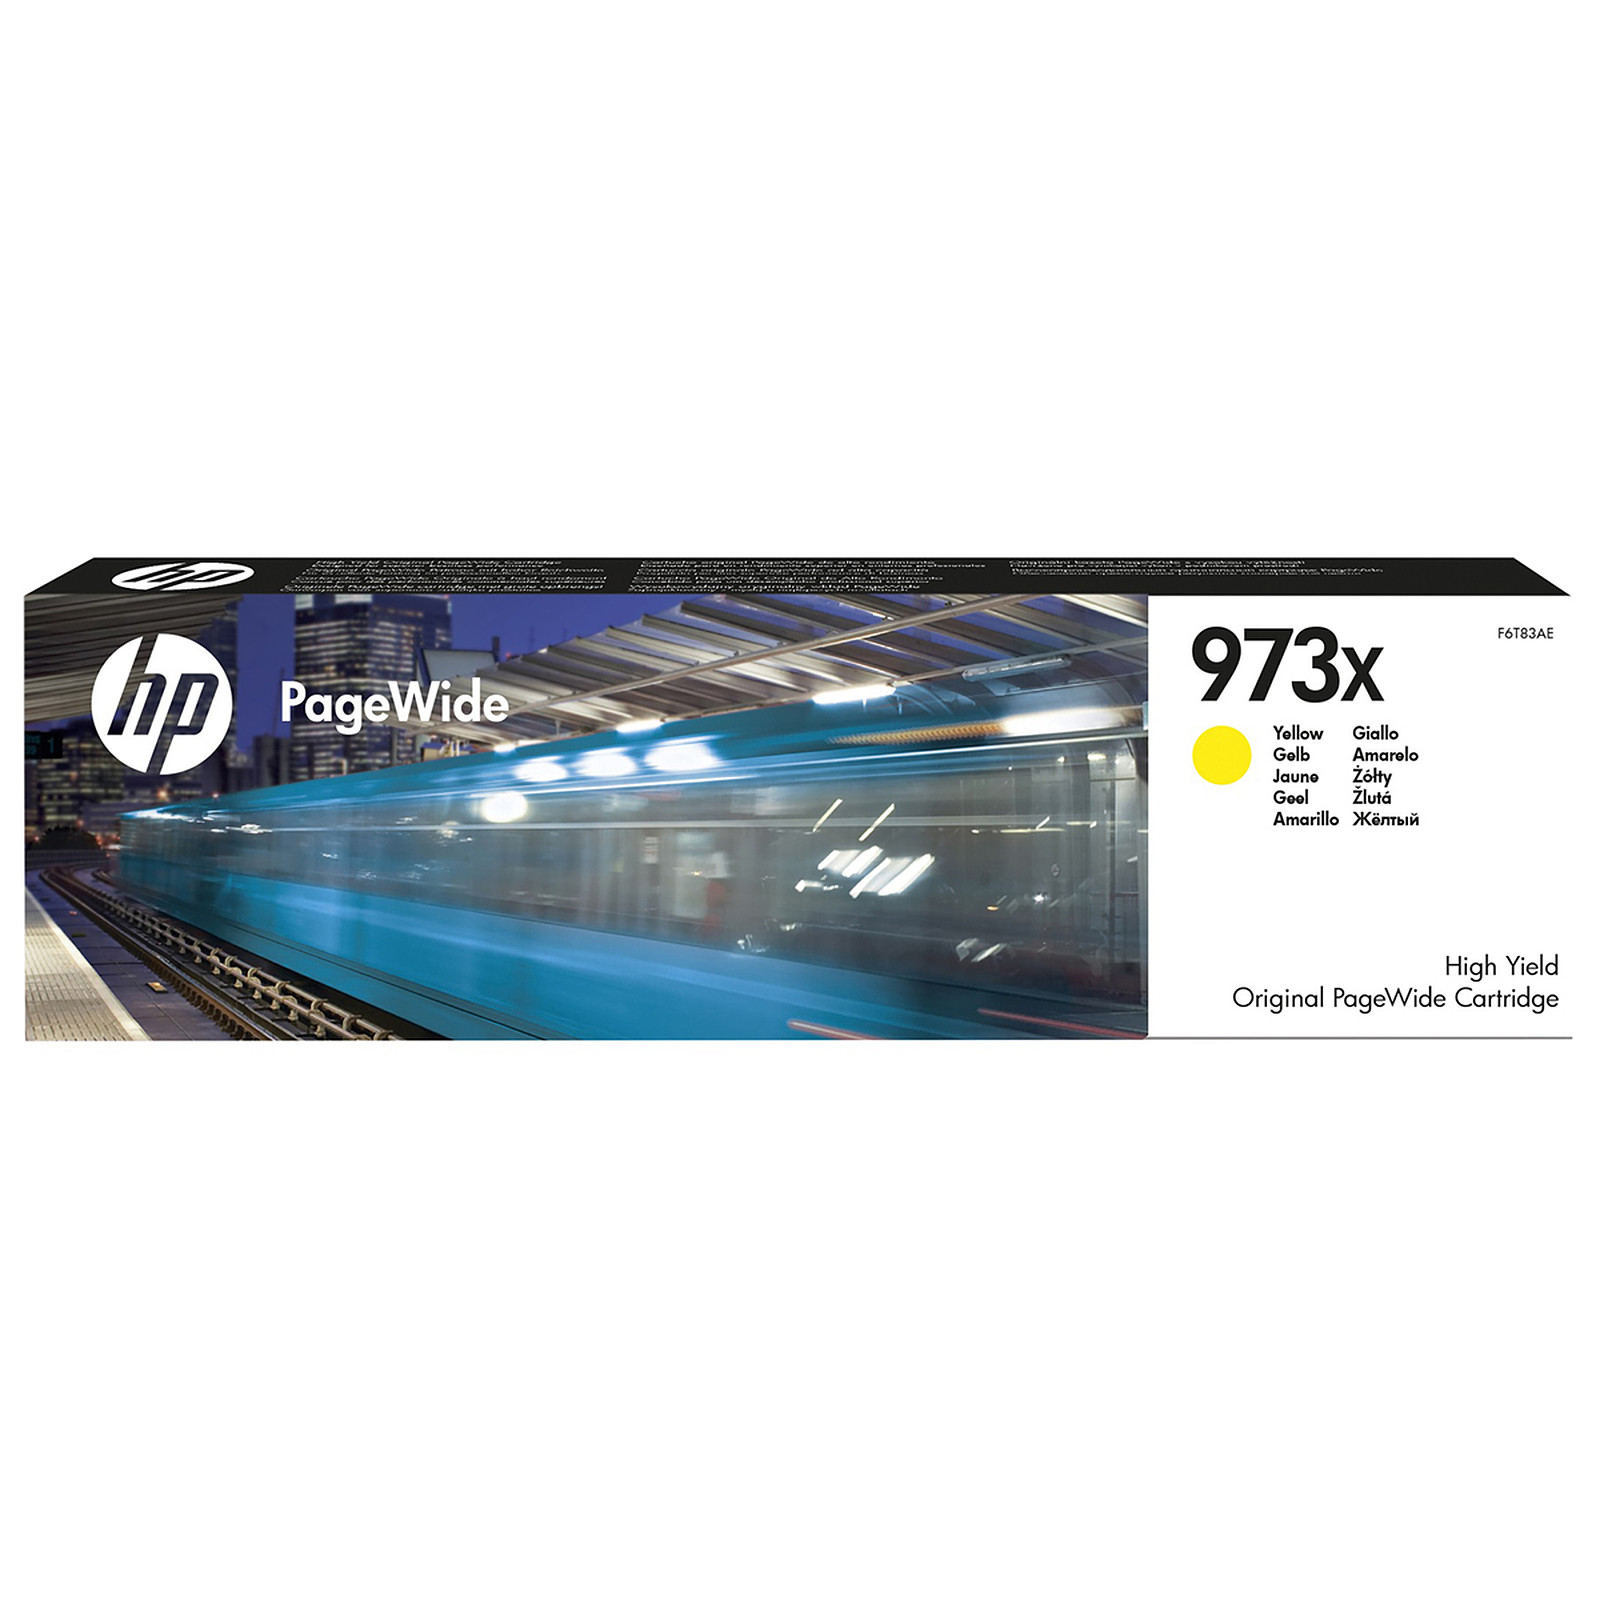 HP PageWide 973X (F6T83AE) - Jaune - Cartouche imprimante HP